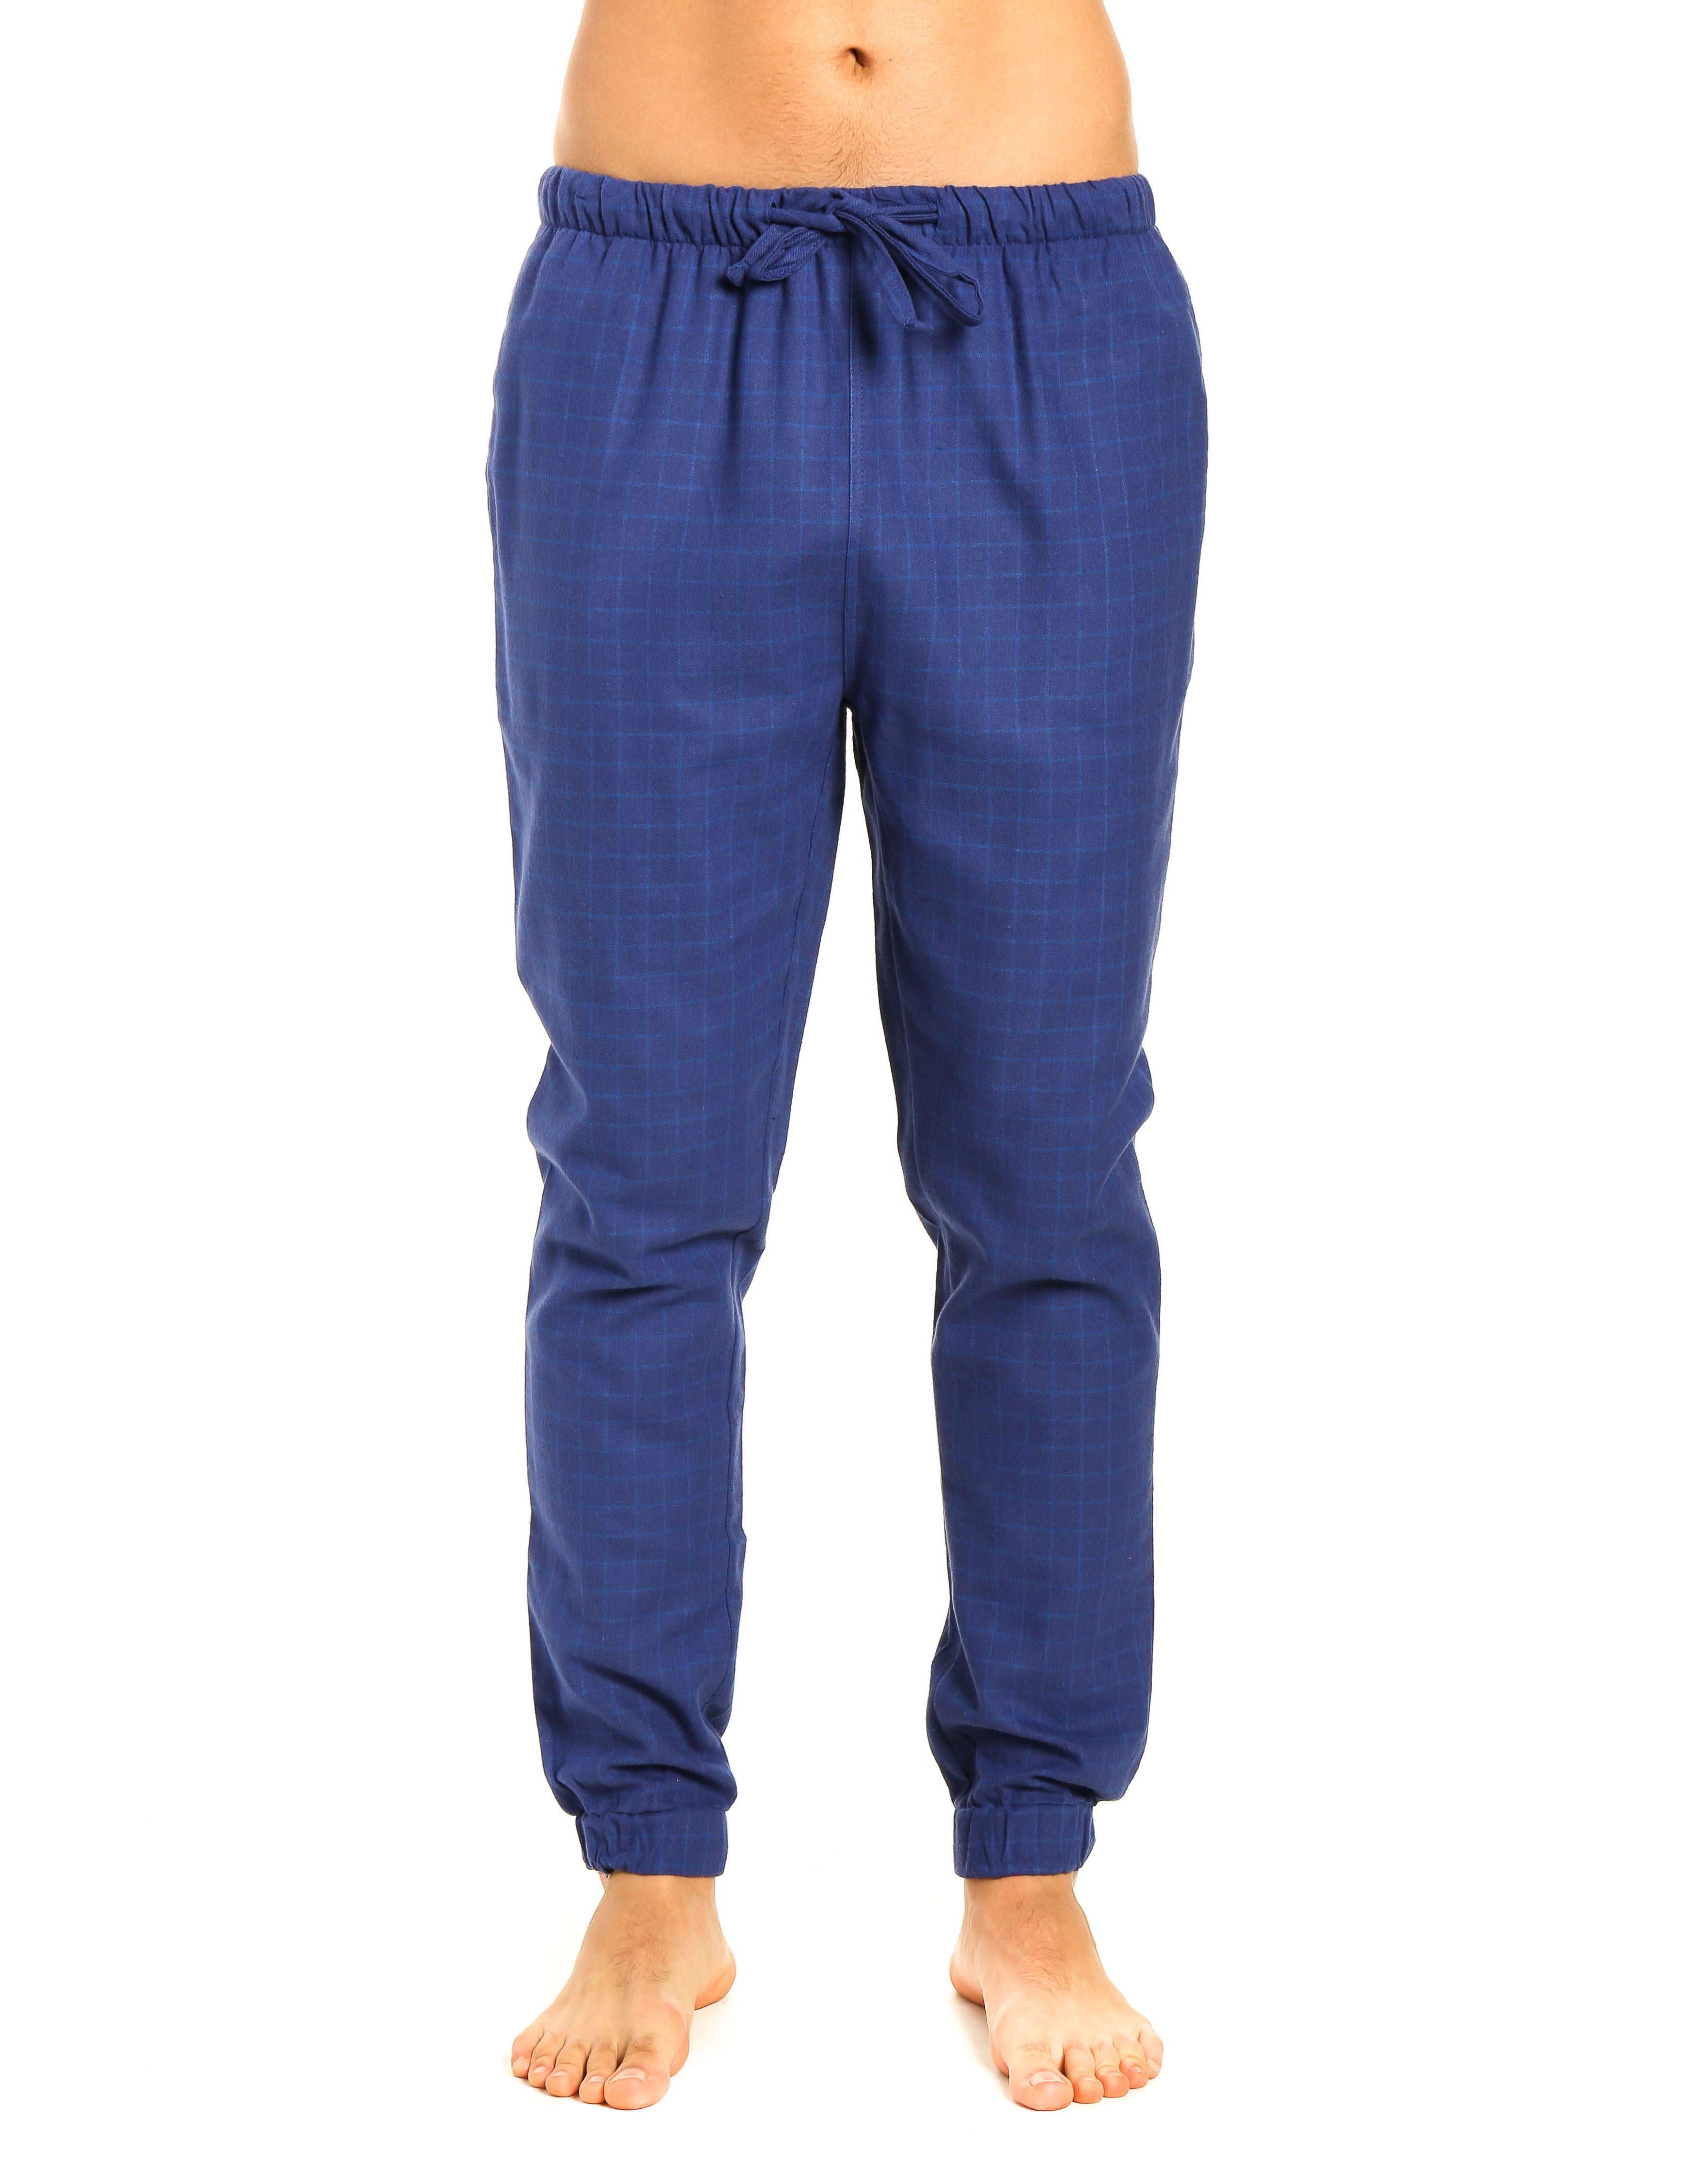 Mens 100% Cotton Flannel Jogger Lounge Pants - Windowpane Checks - Navy Blue